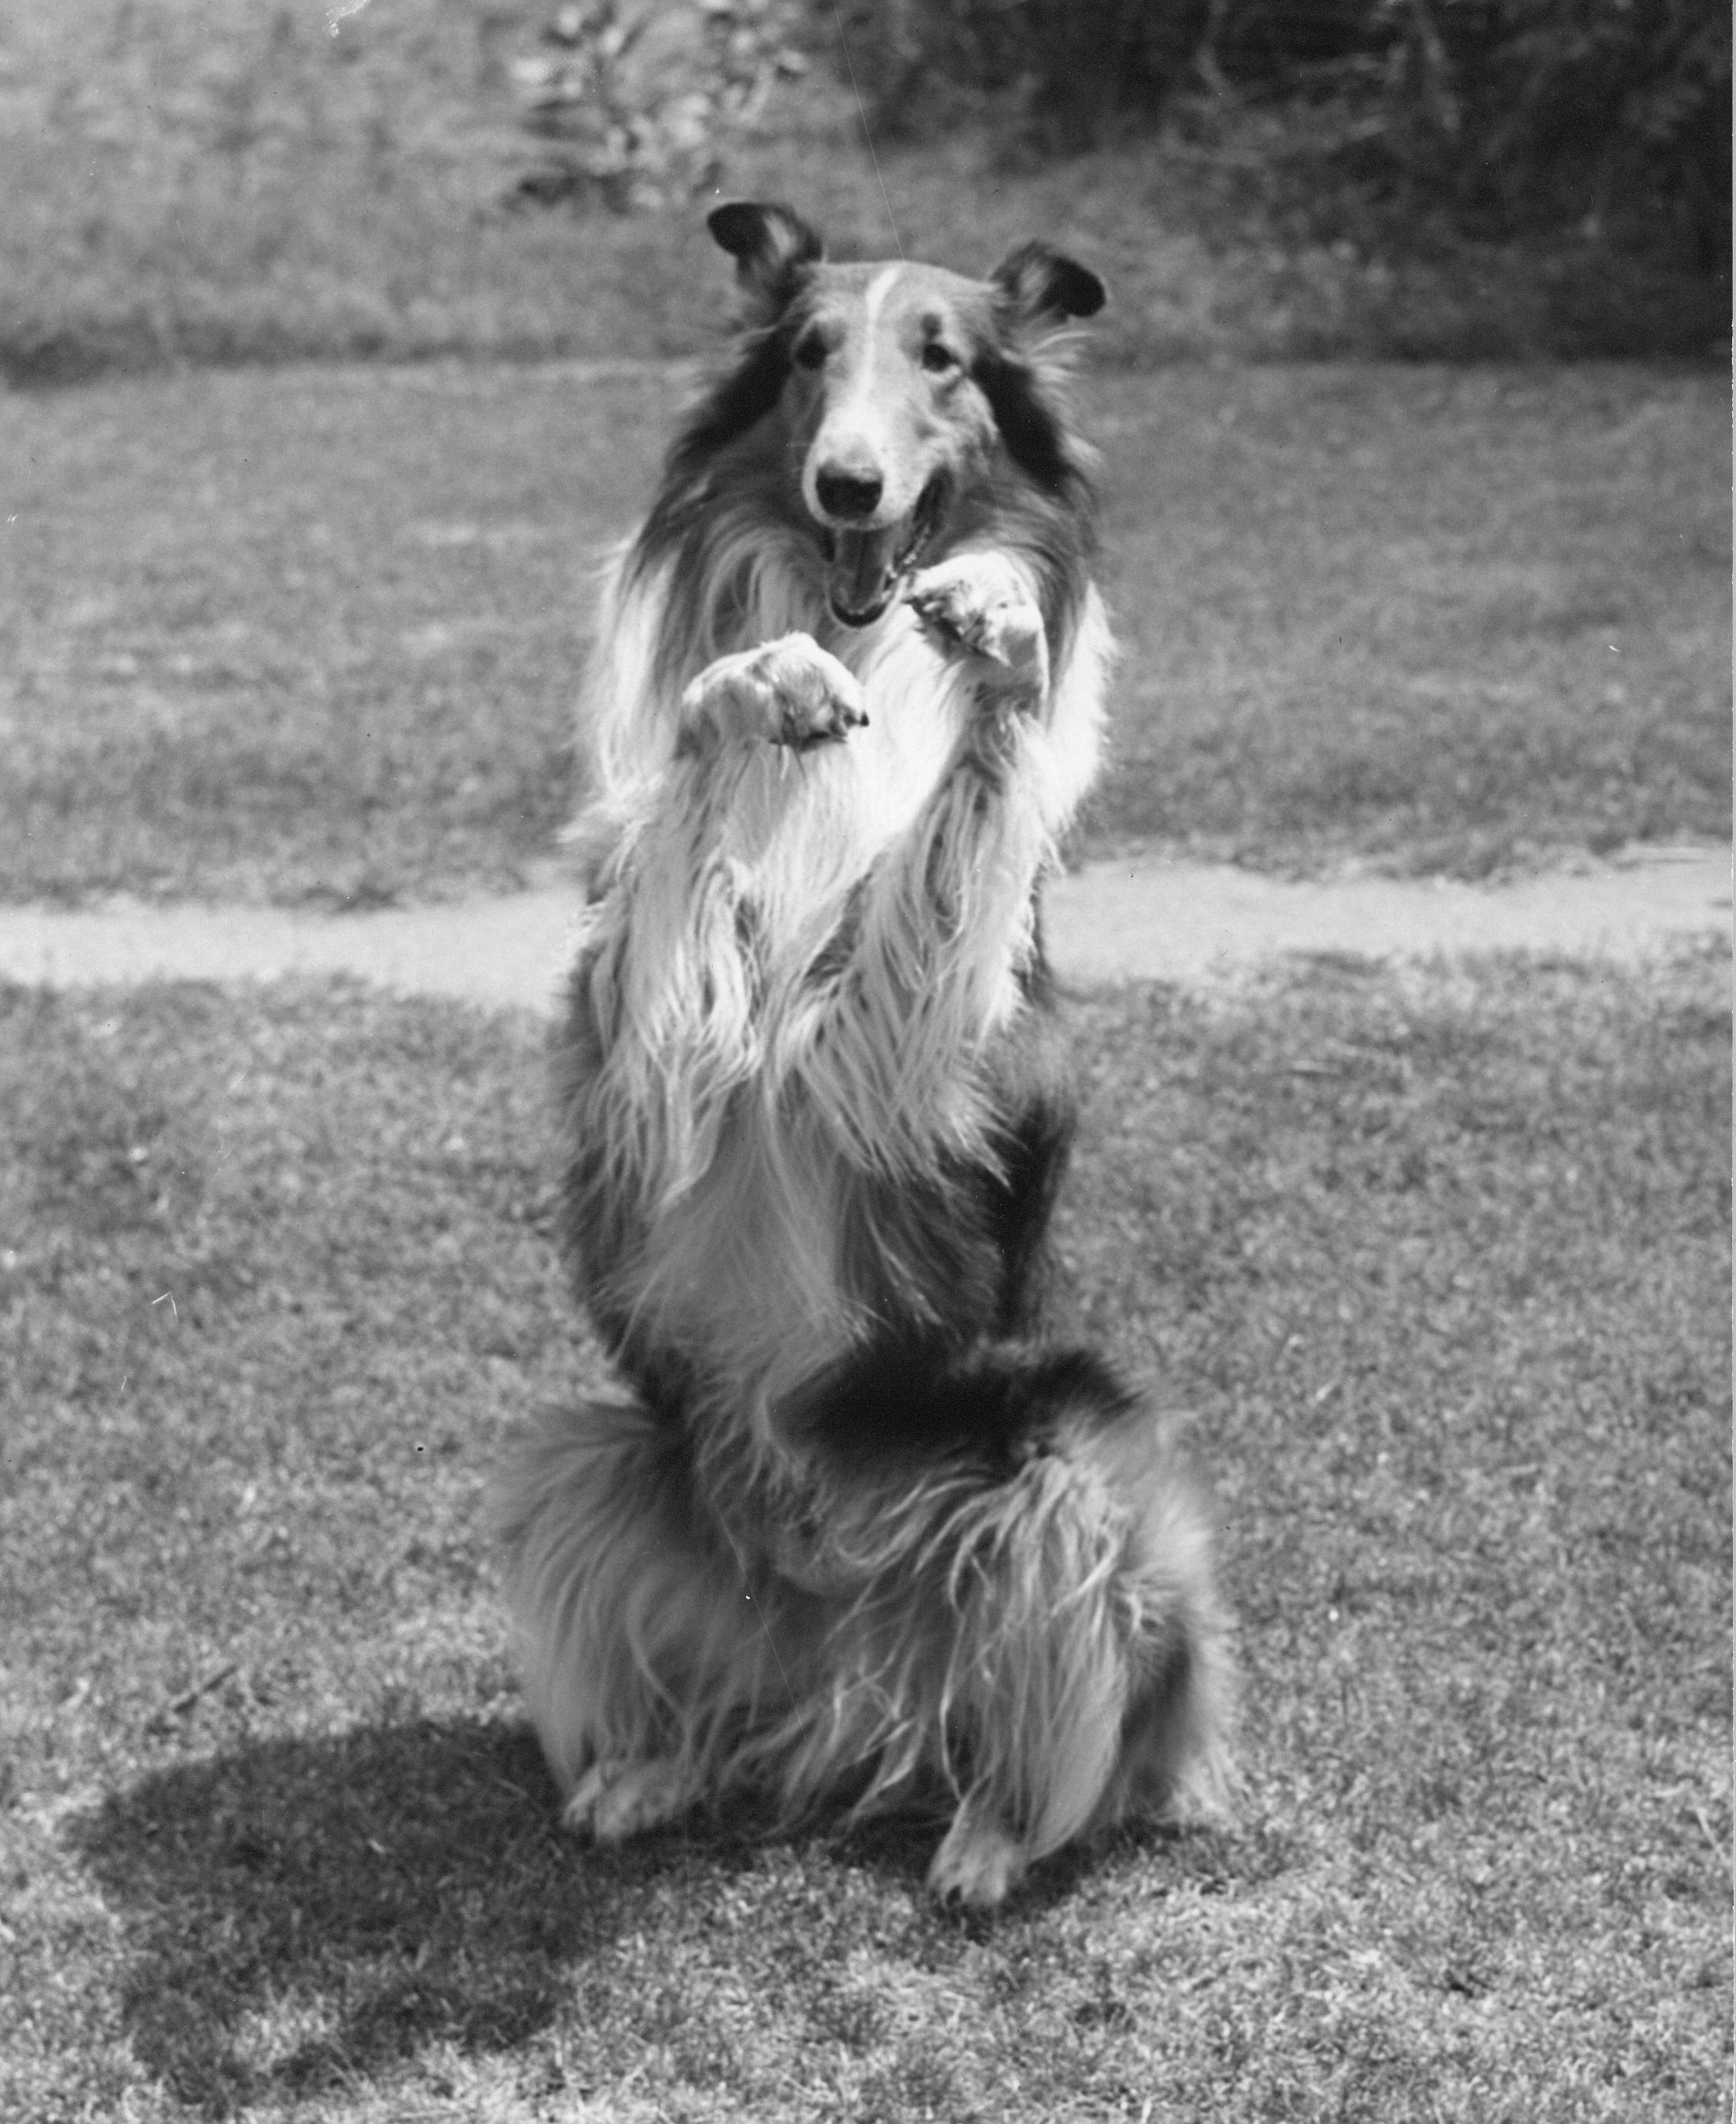 Unknown Portrait Photograph - Lassie: the Most Celebrated Collie in Film Vintage Original Photograph